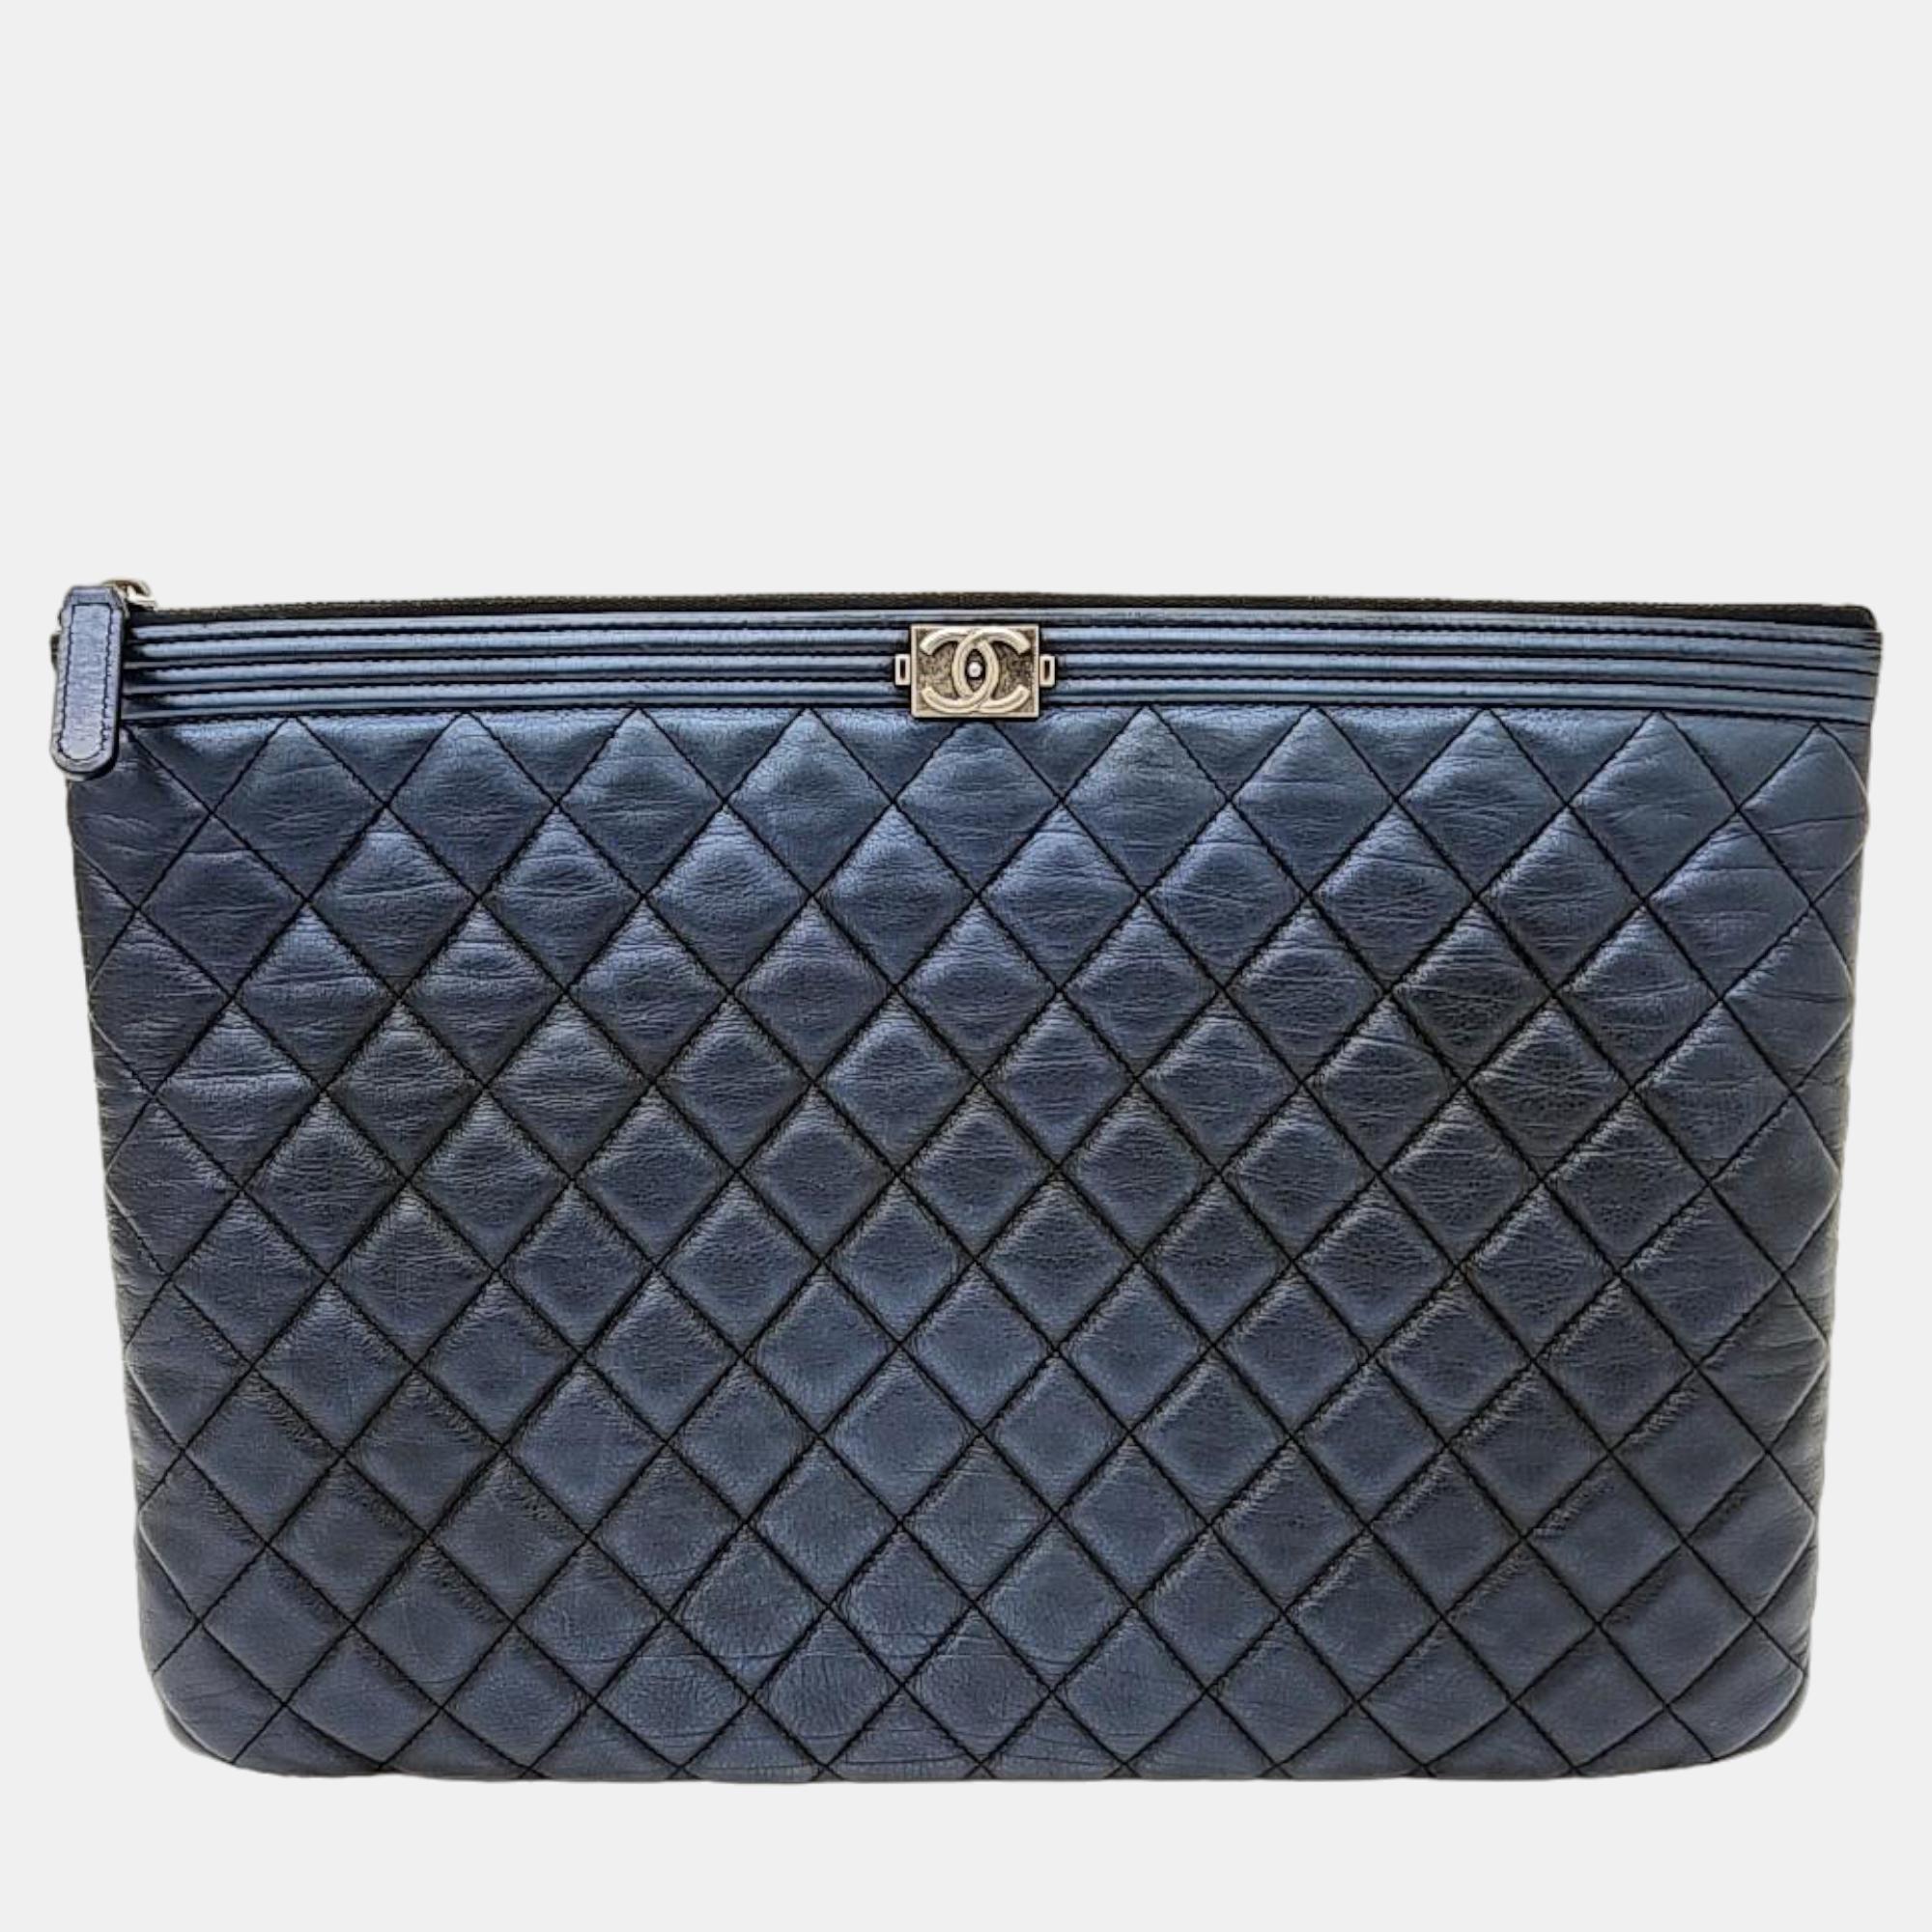 Chanel navy blue leather o case large boy clutch bag